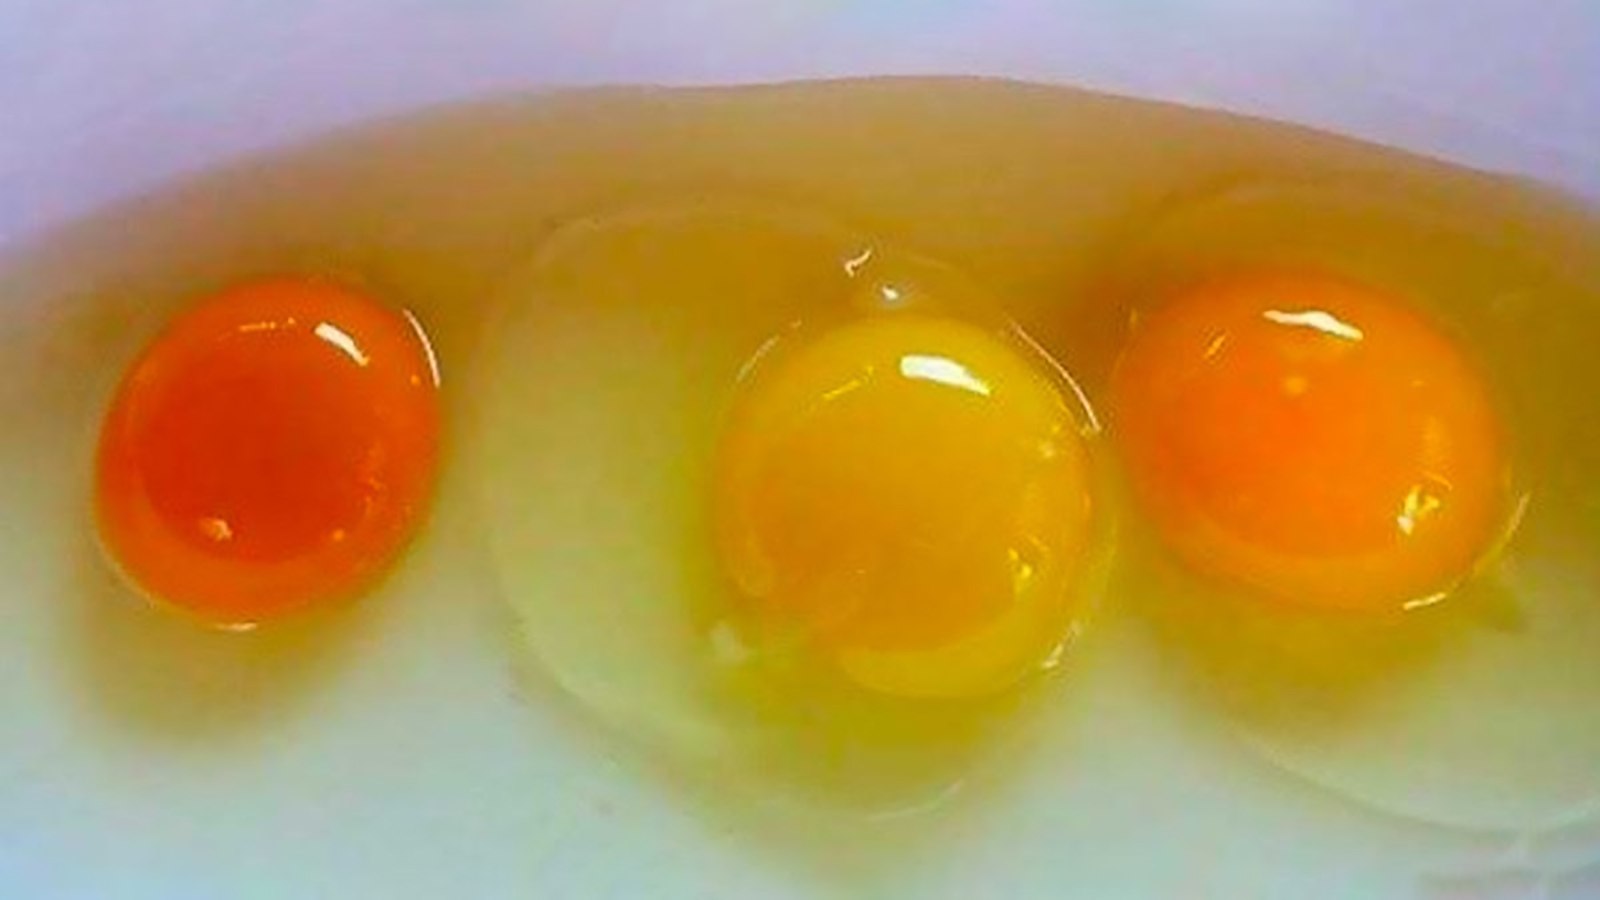 The strongest egg yolk. Цвет желтка яиц. Цвет куриного желтка. Оранжевый желток. Нормальный цвет желтка в курином яйце.